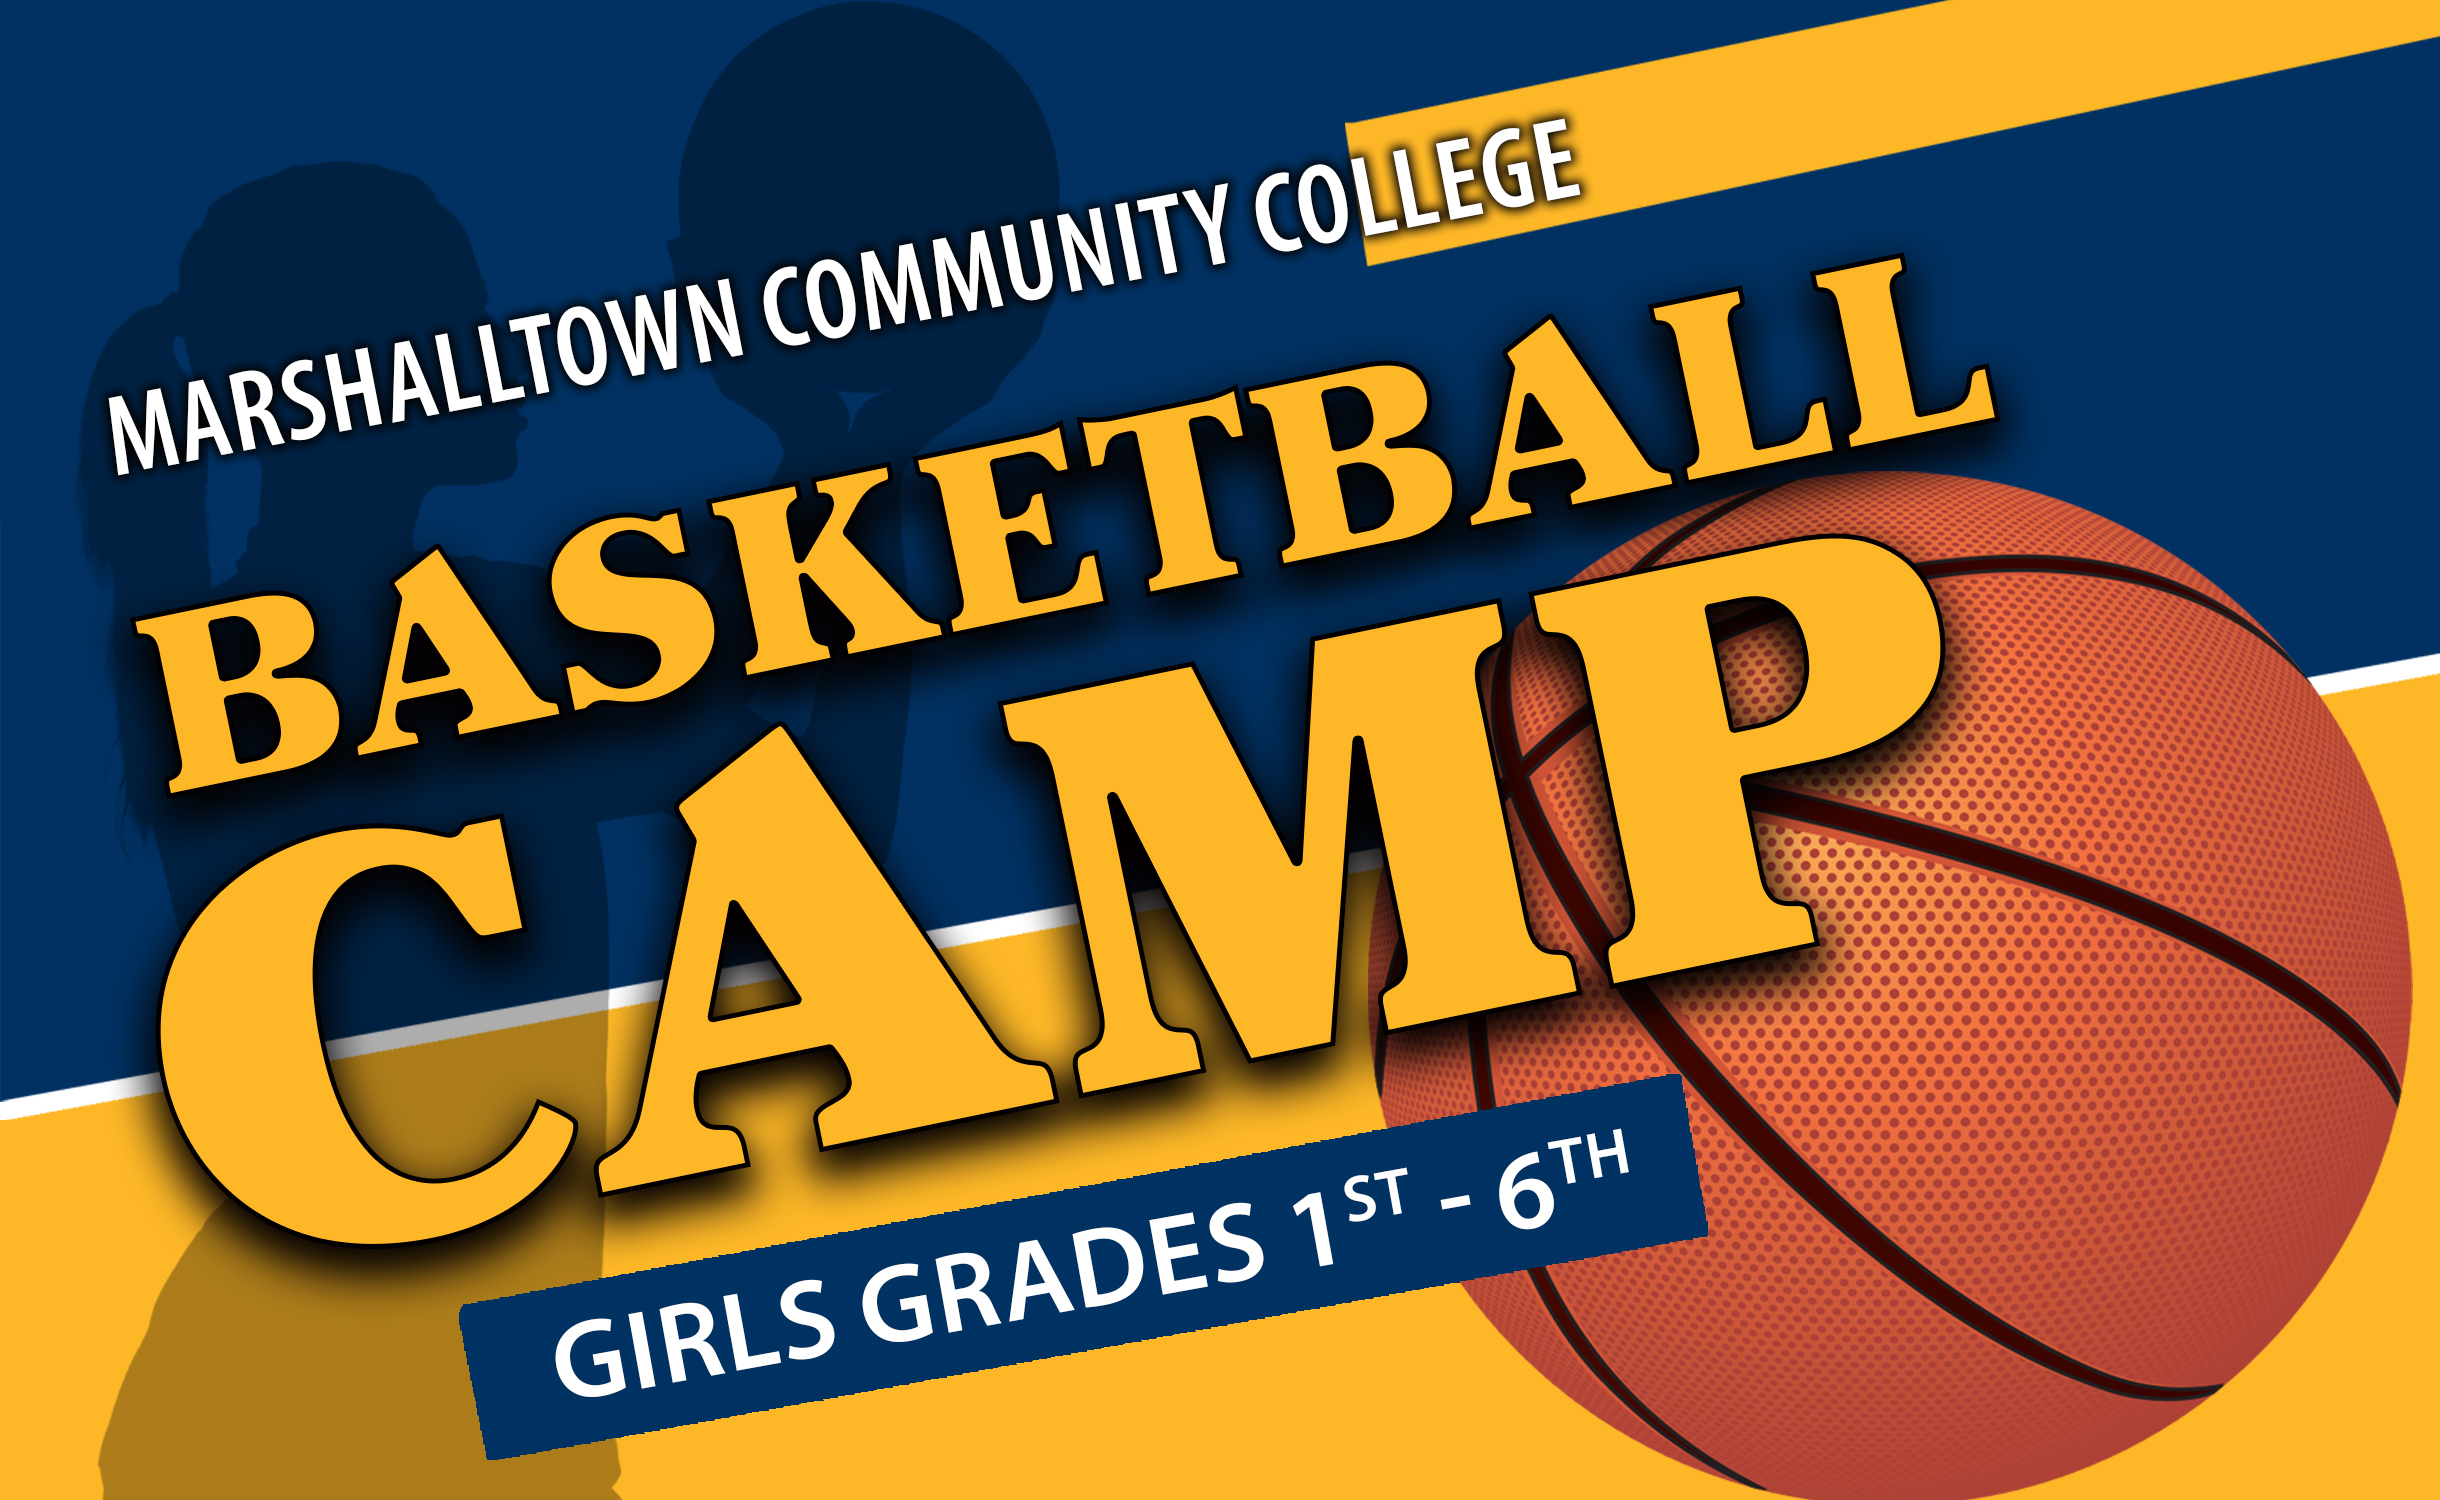 MCC Basketball camp set for June 10-13